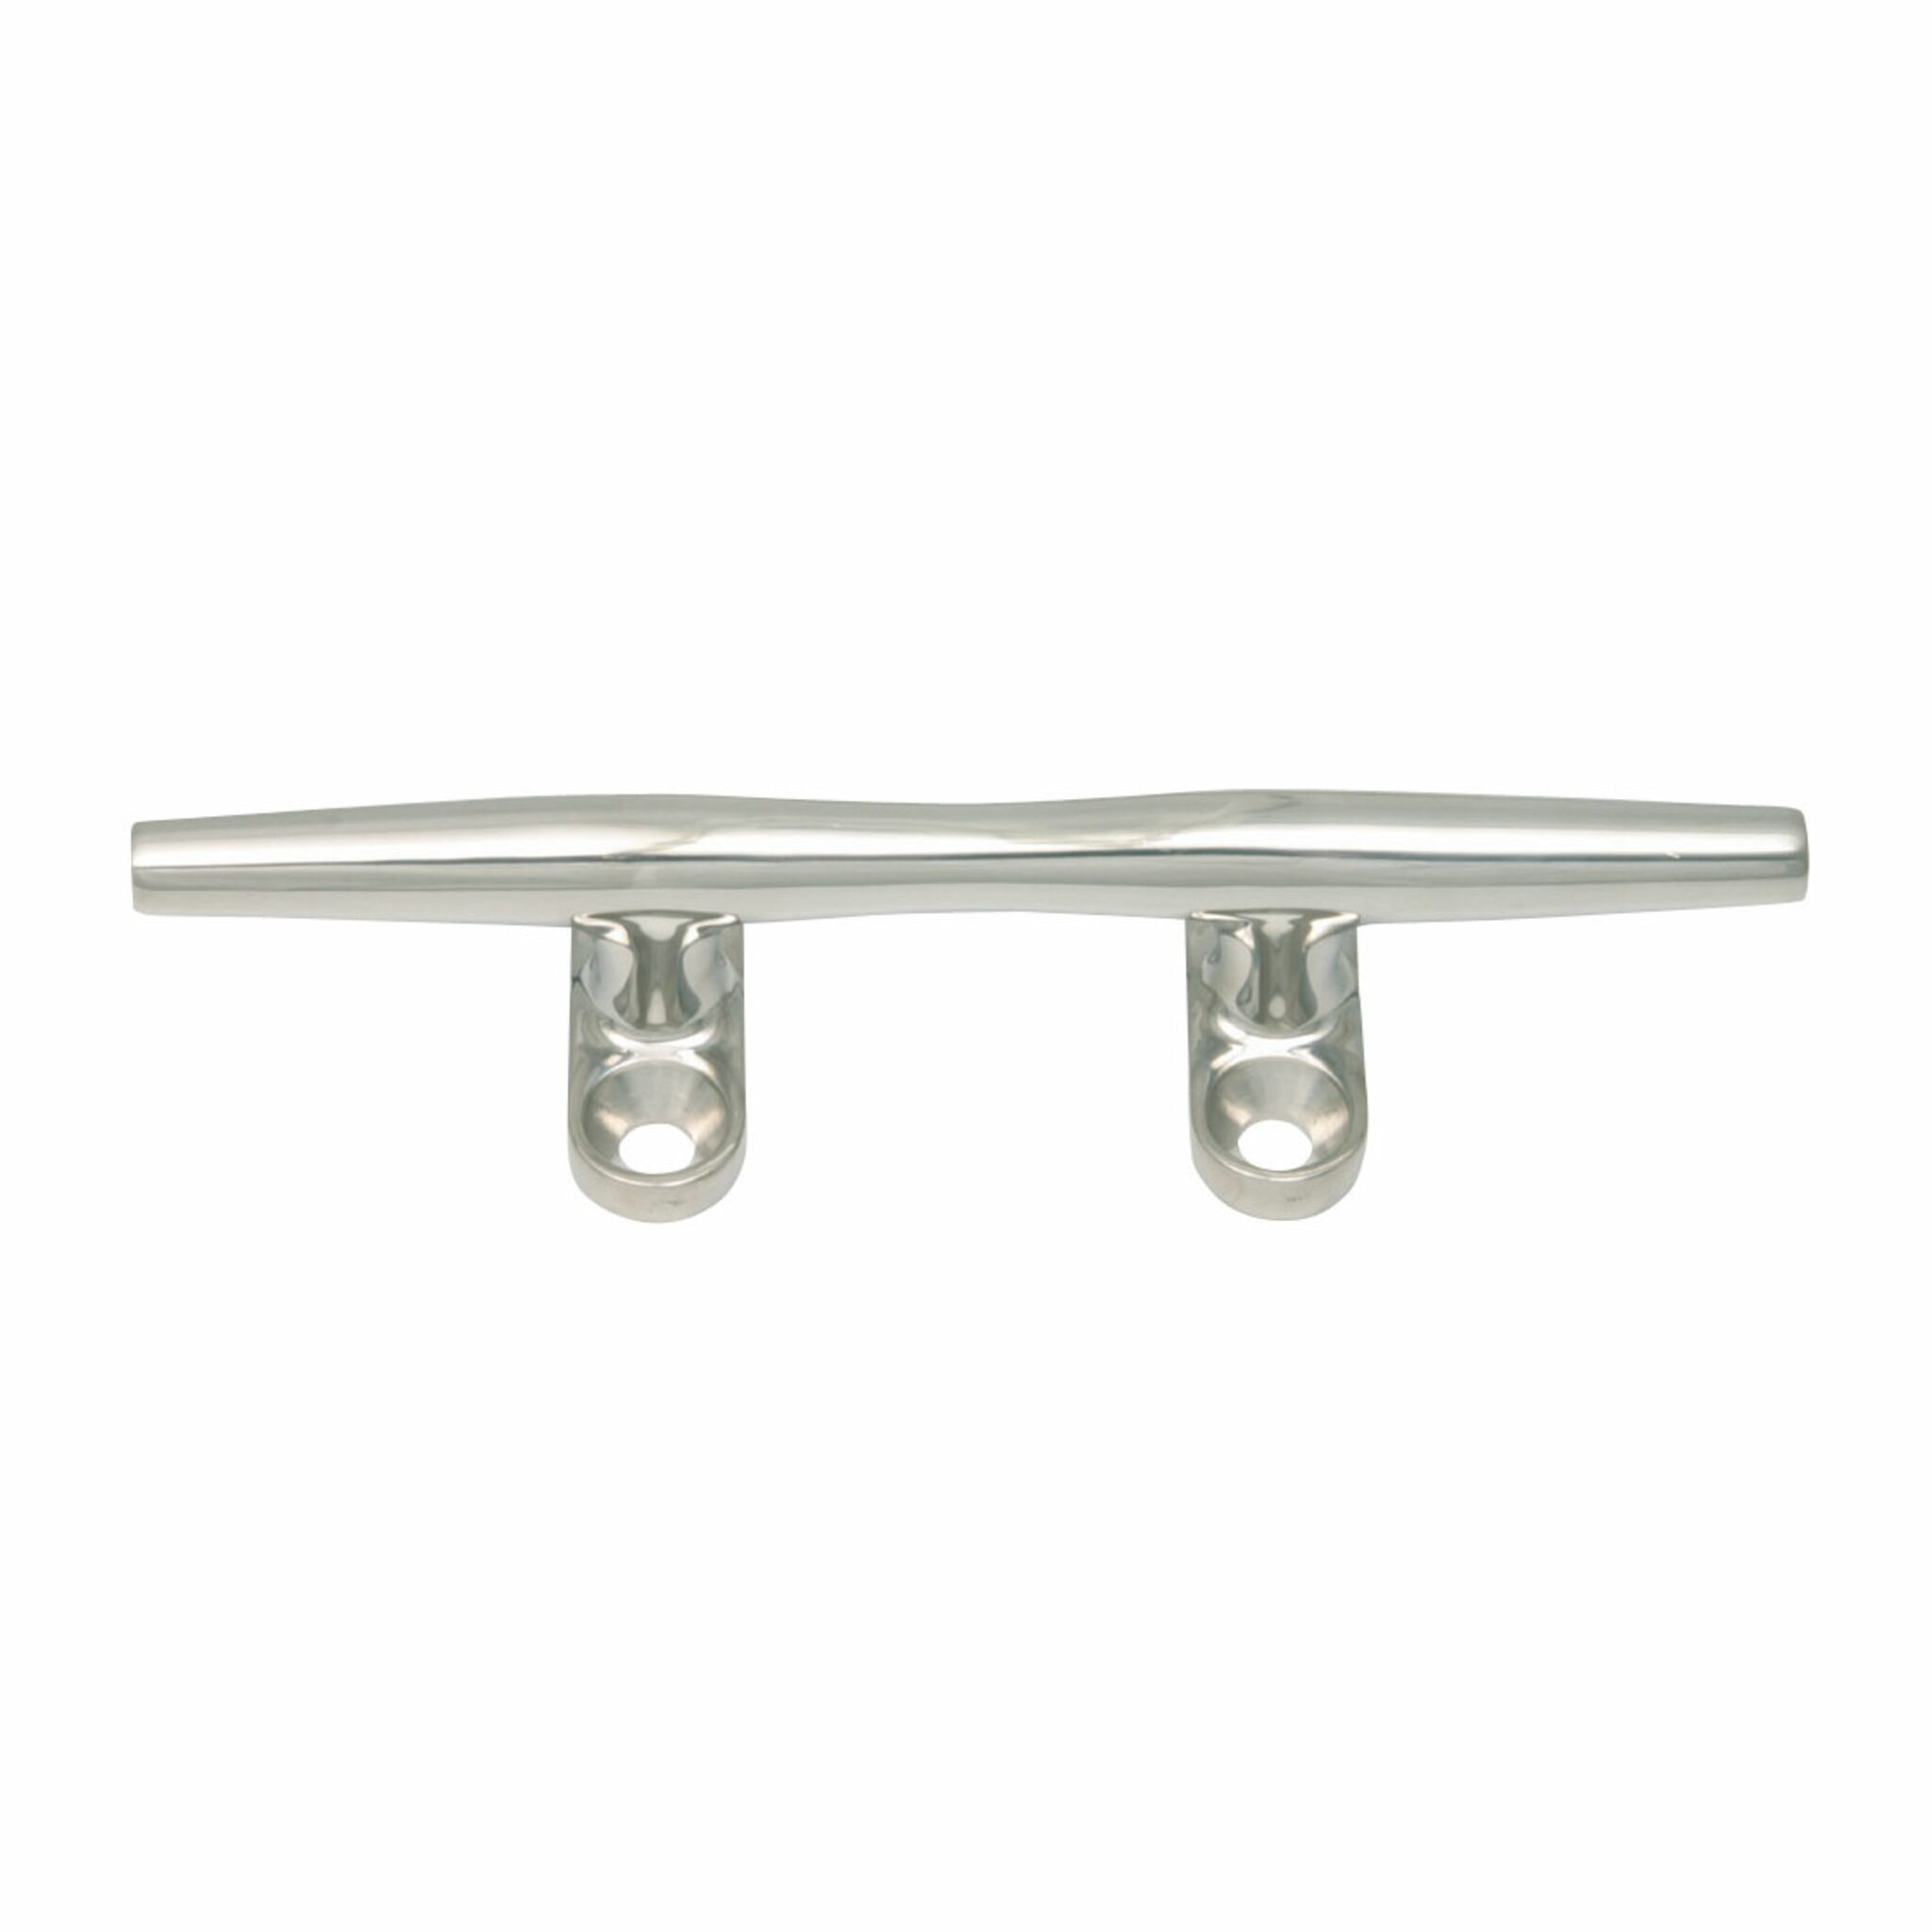 Stainless steel slip cleat, narrow shape